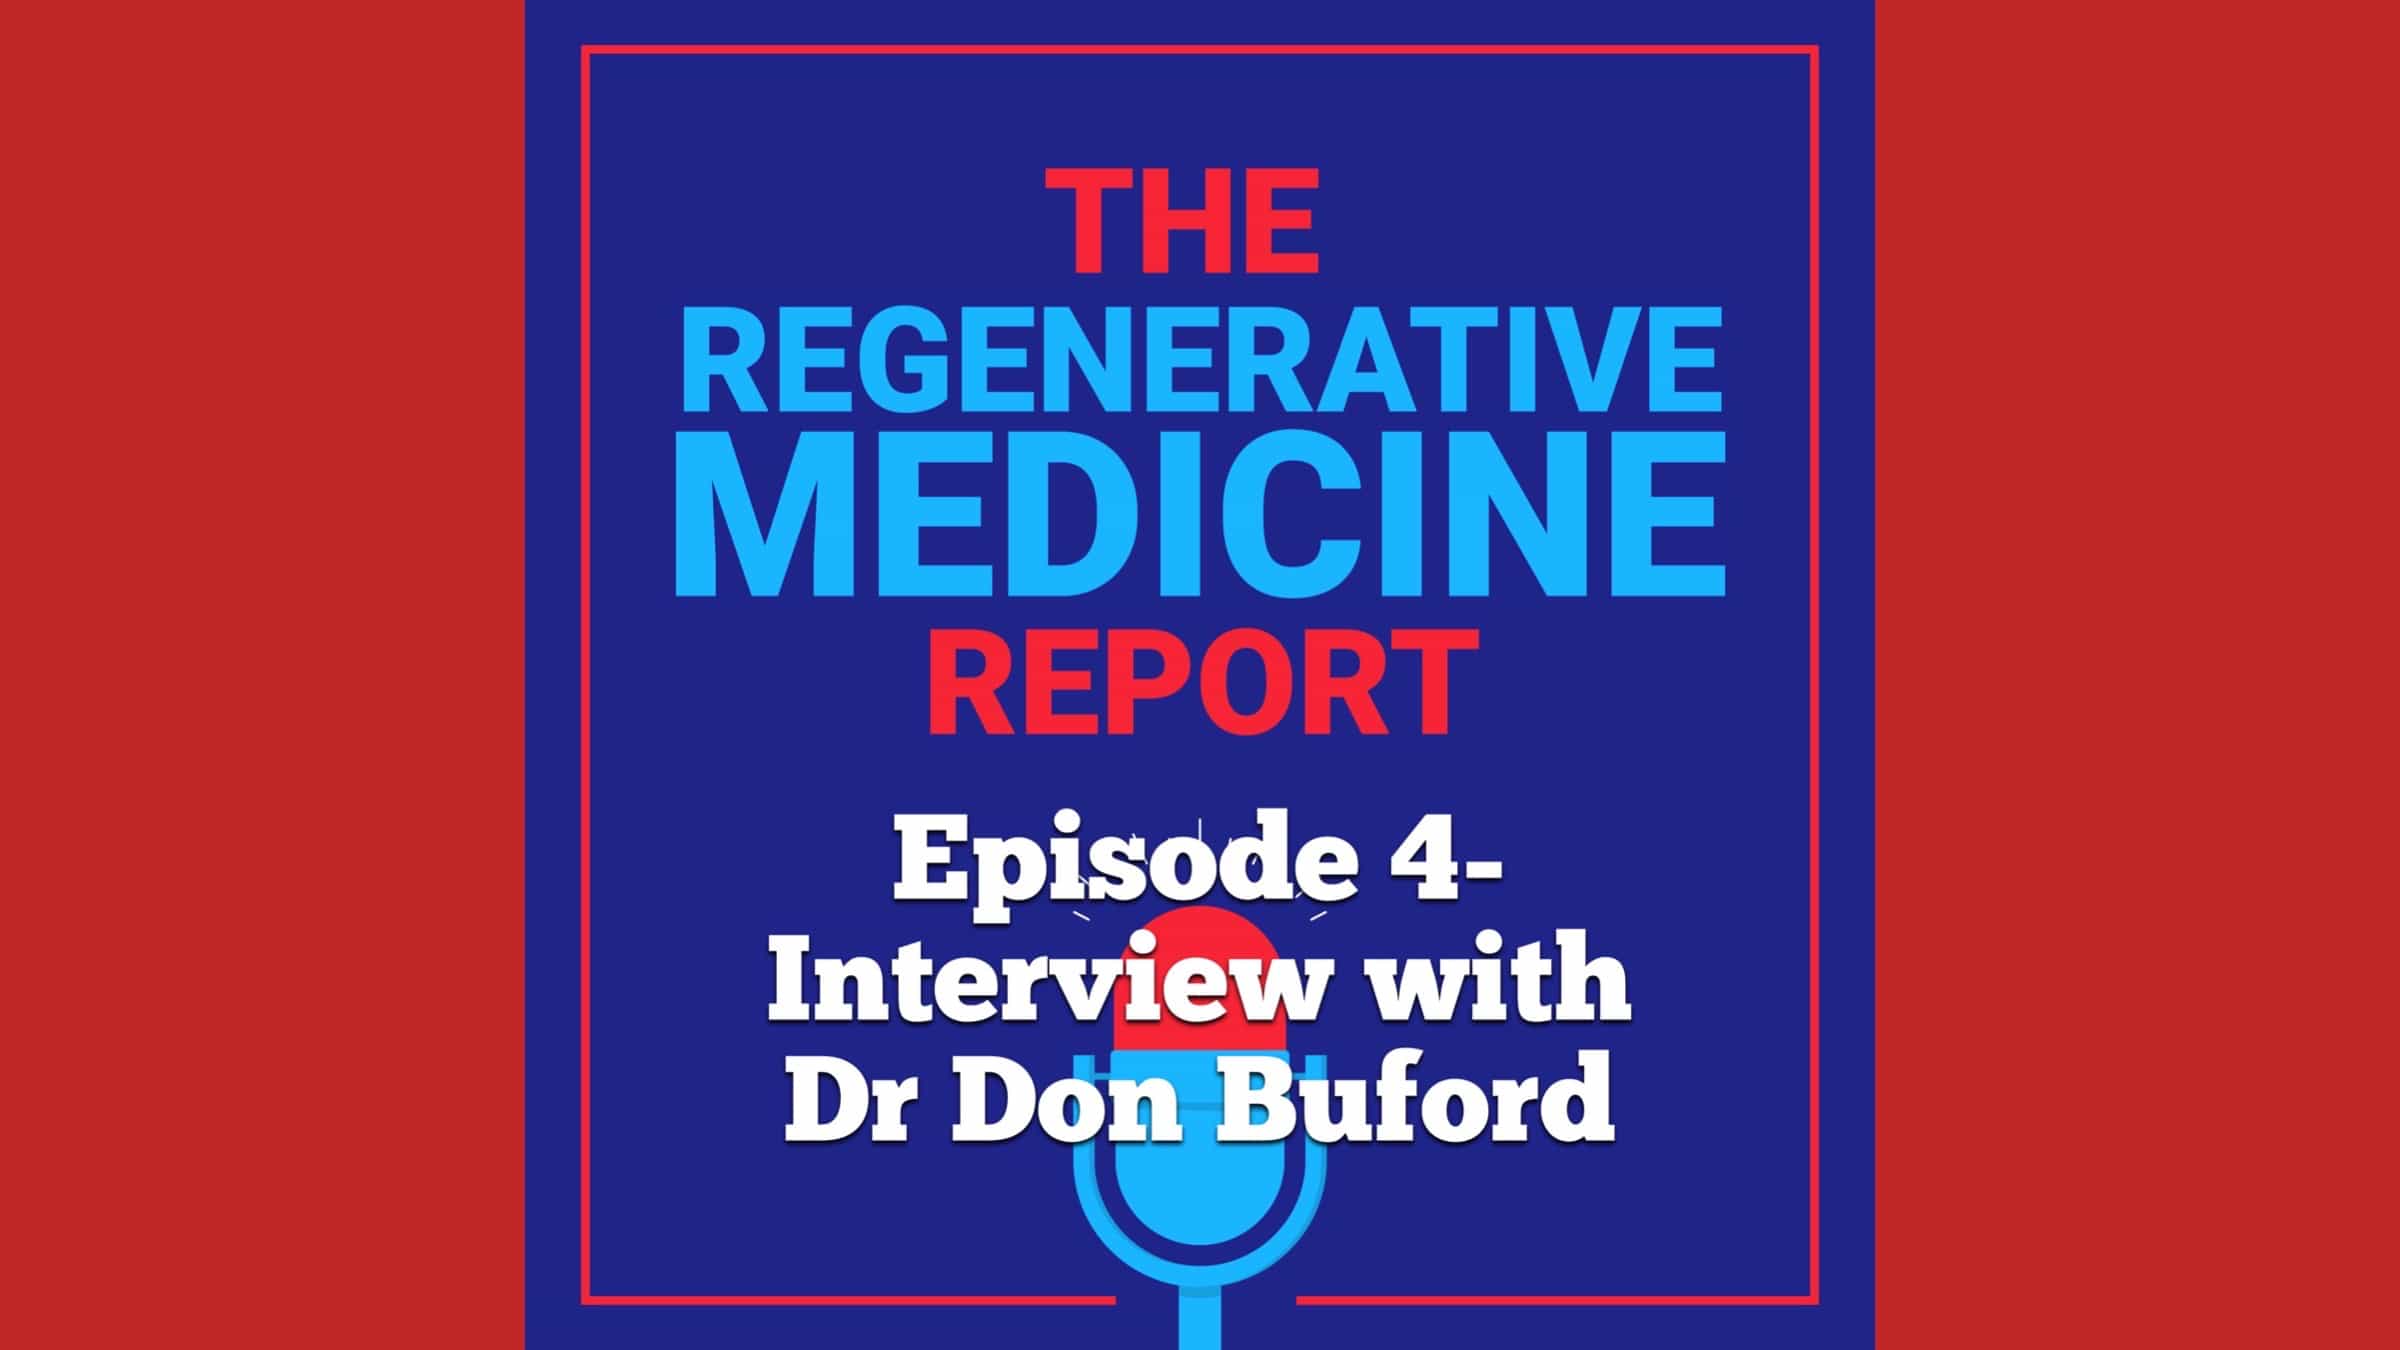 Video Podcast- Episode 4 of the Regenerative Medicine Report